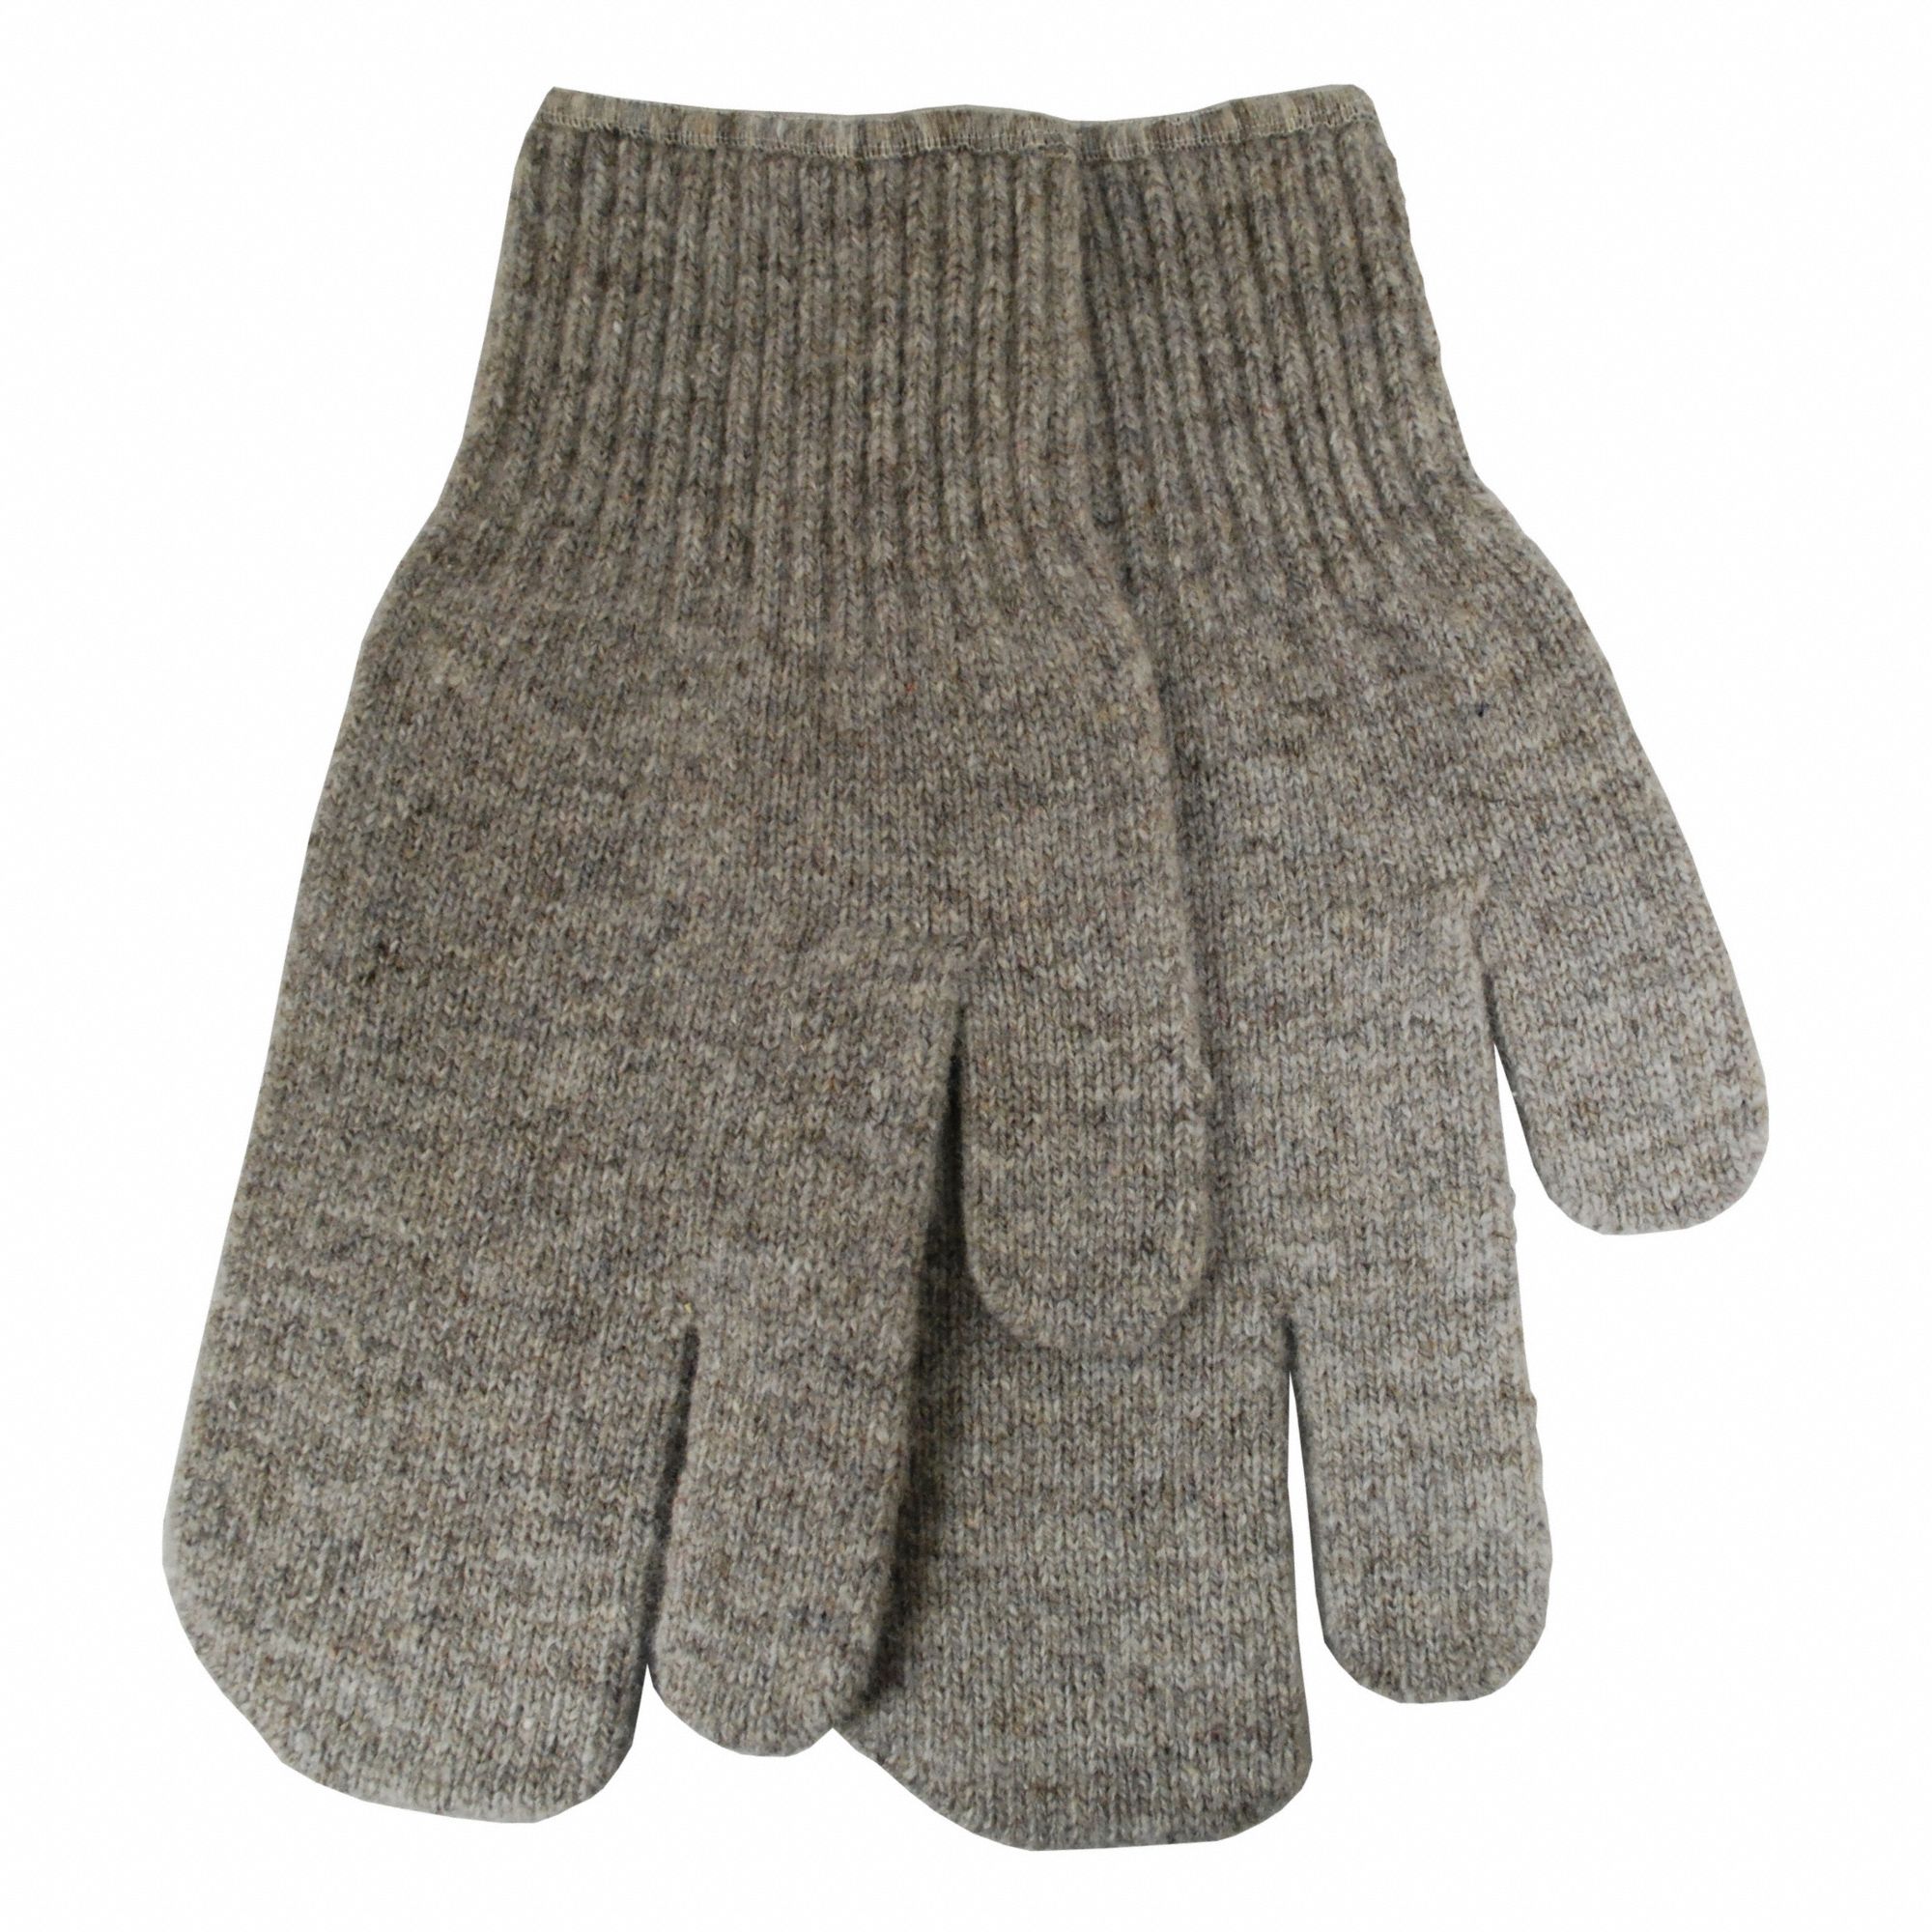 Watson Gloves Mitts, One-finger, Wool [PK/1.0] Model: 628